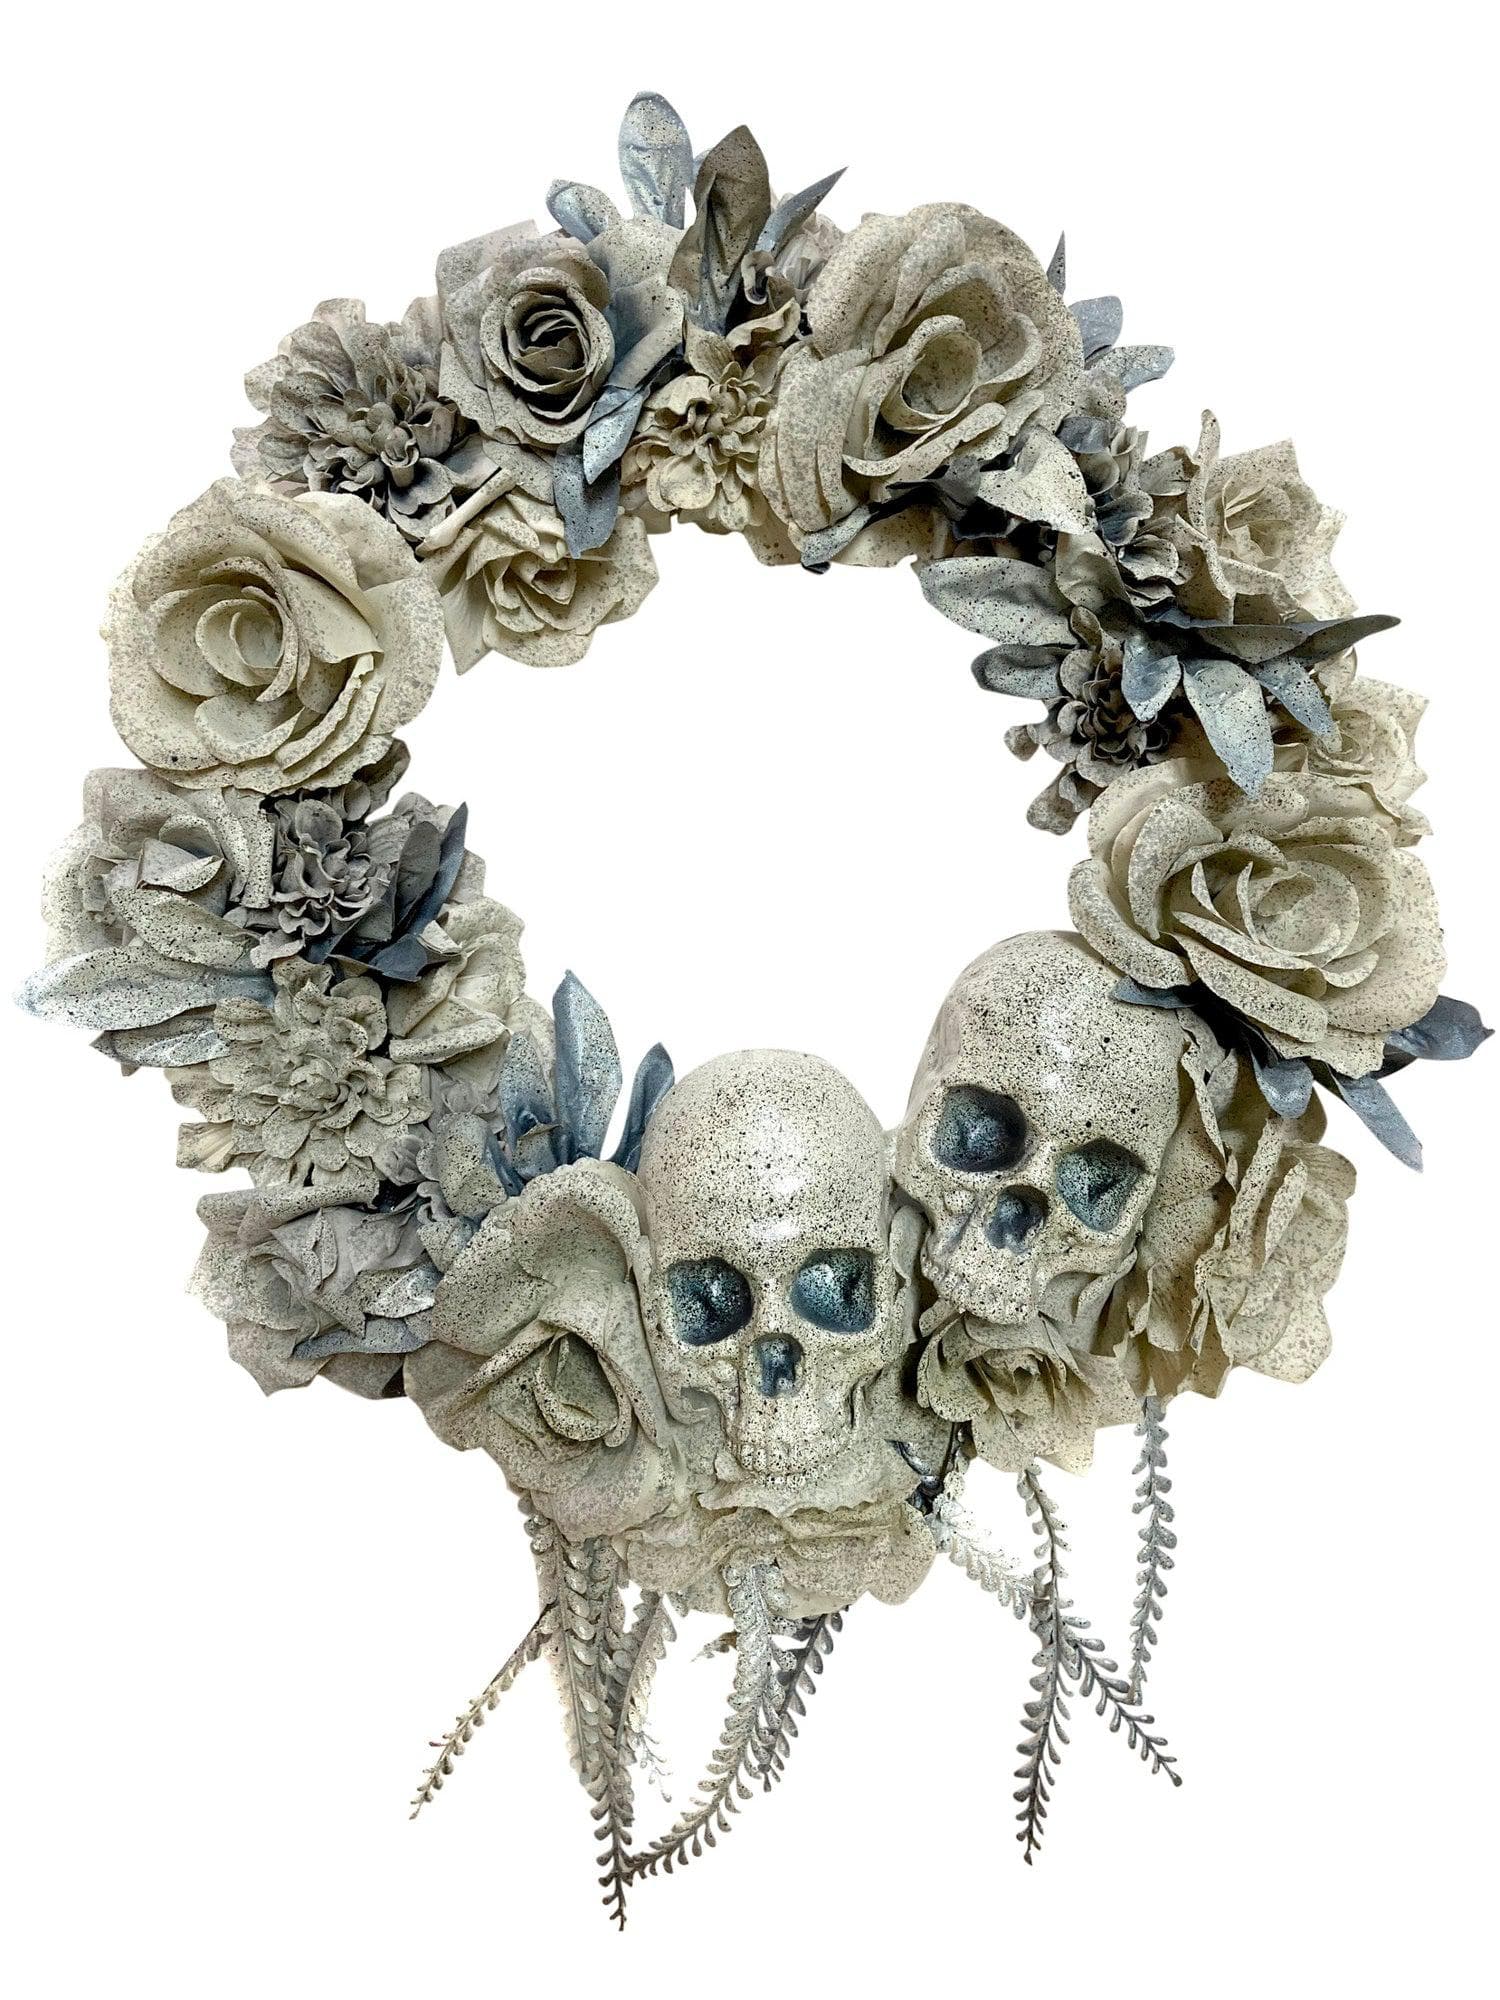 20 Inch Skull & Roses White Wreath Window Wall Decor - costumes.com